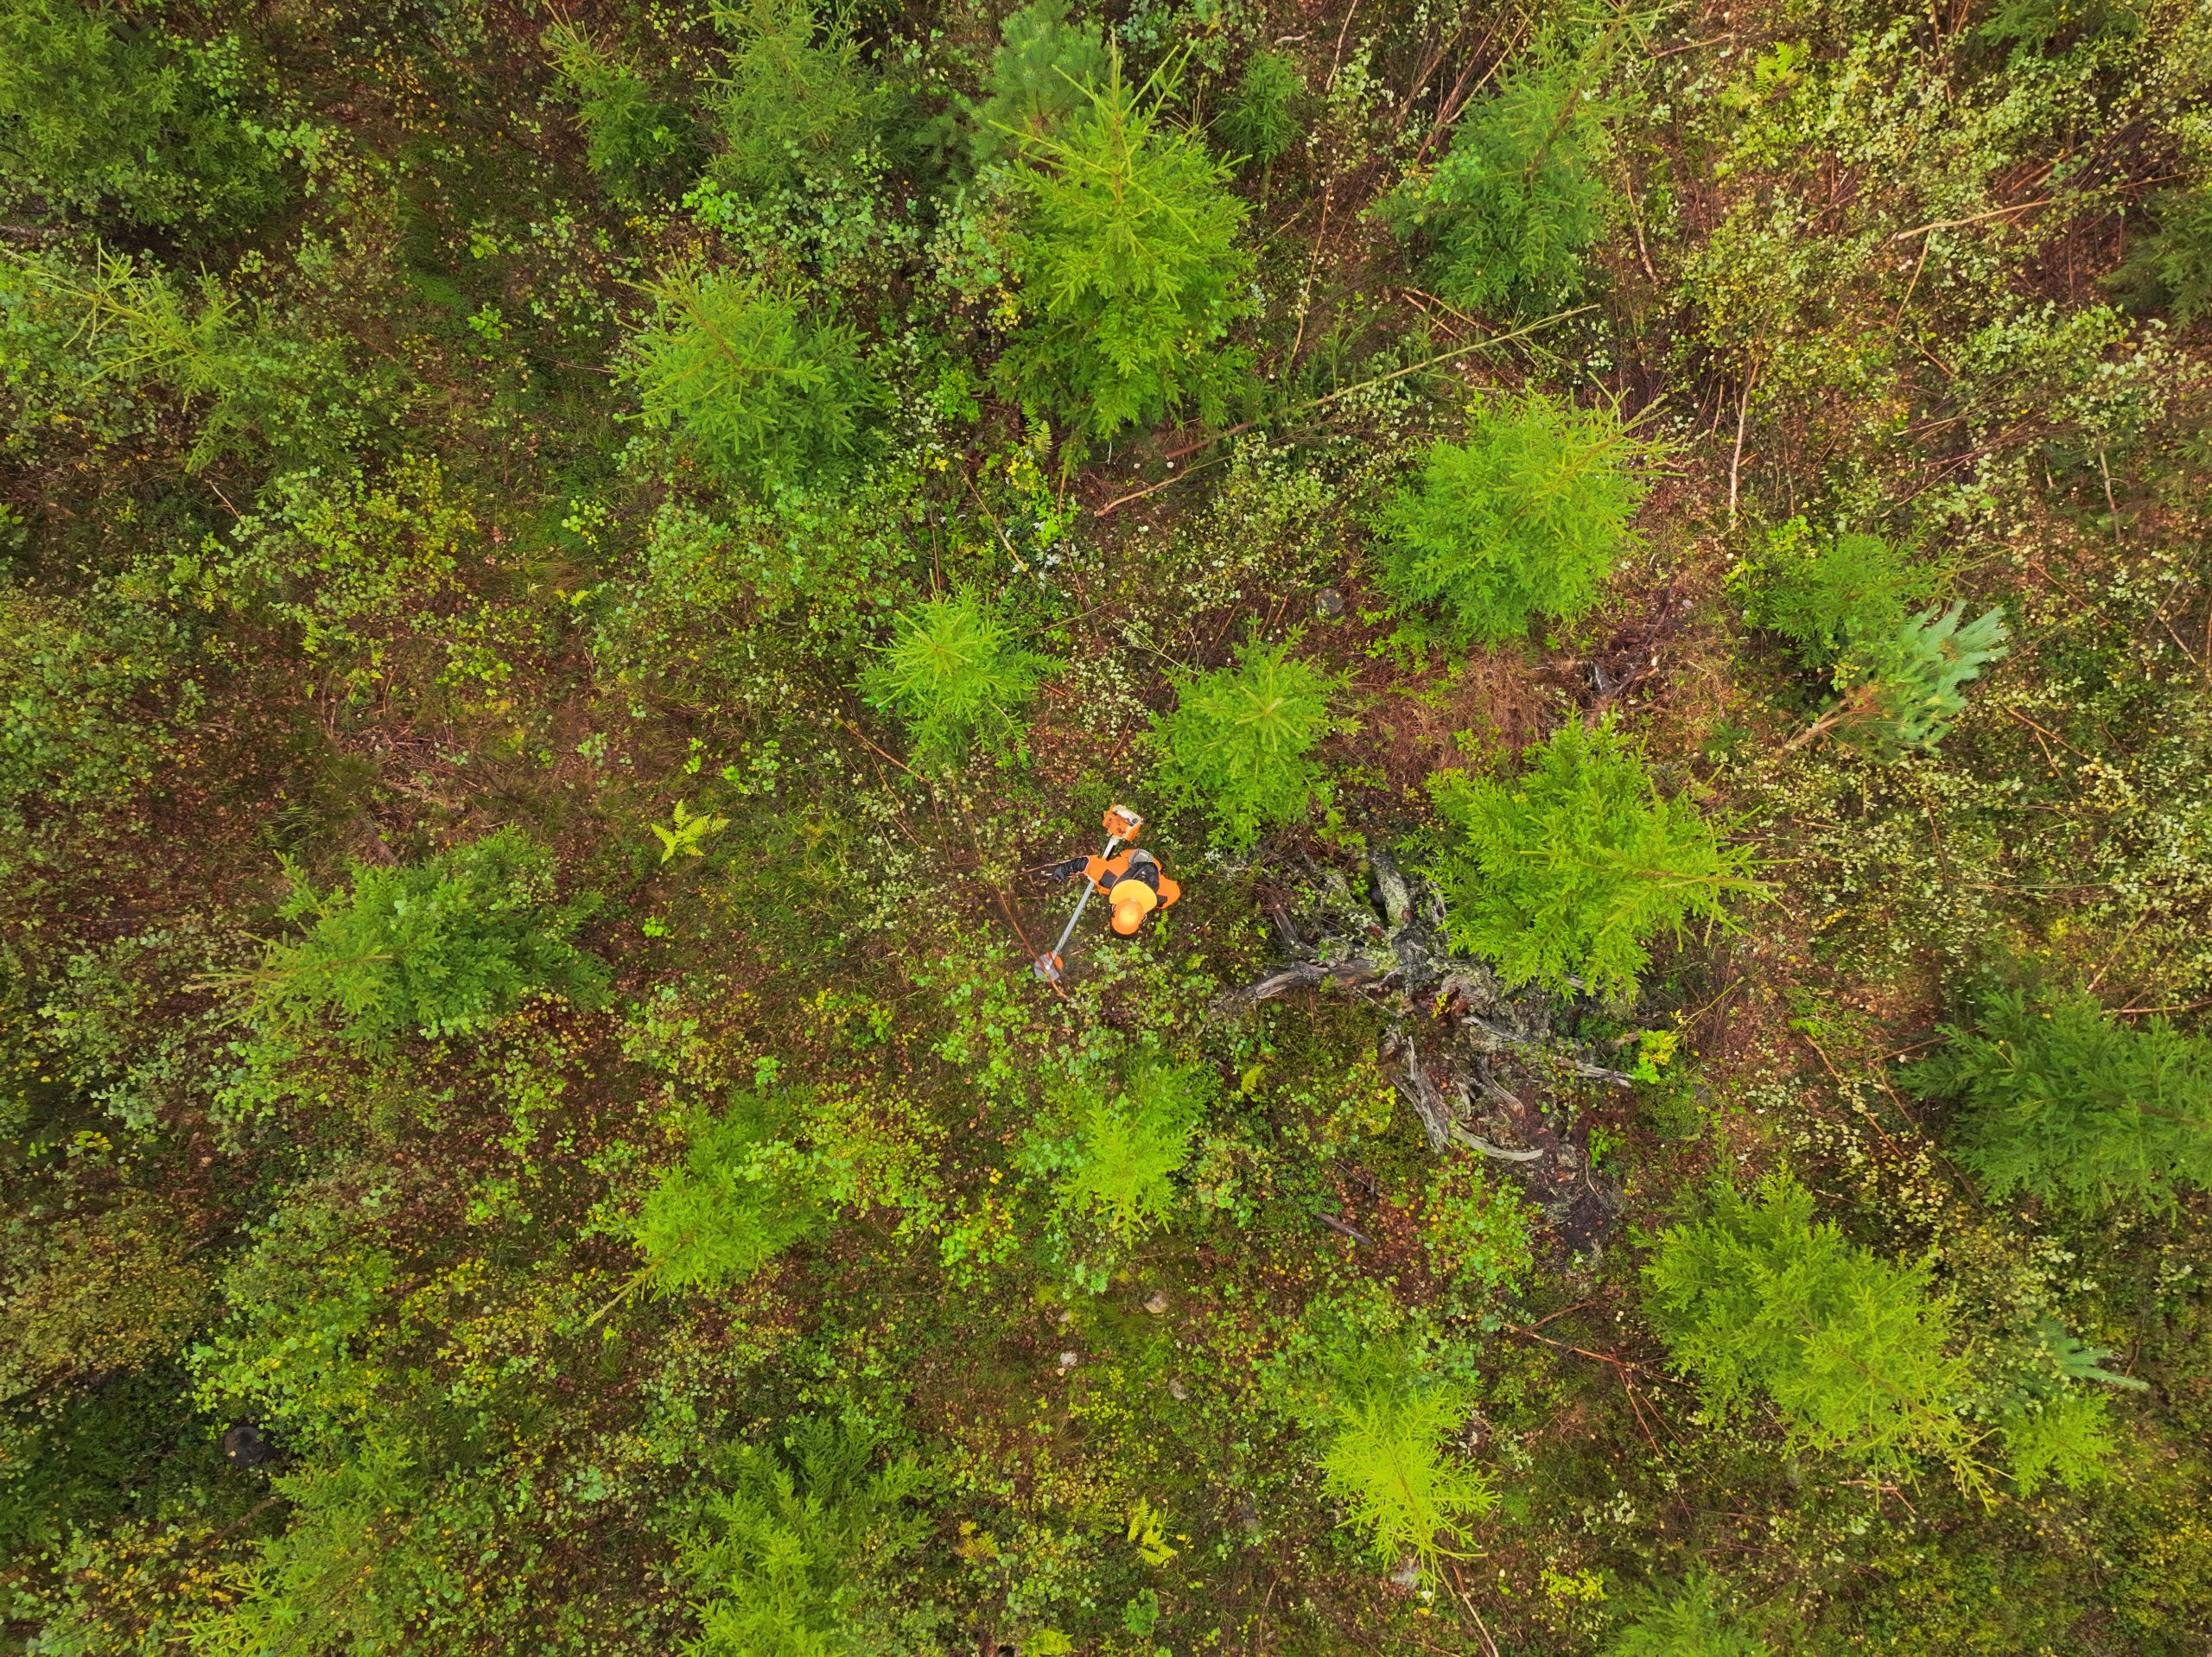 Dronefoto høyt over person med ryddesag i skogen.